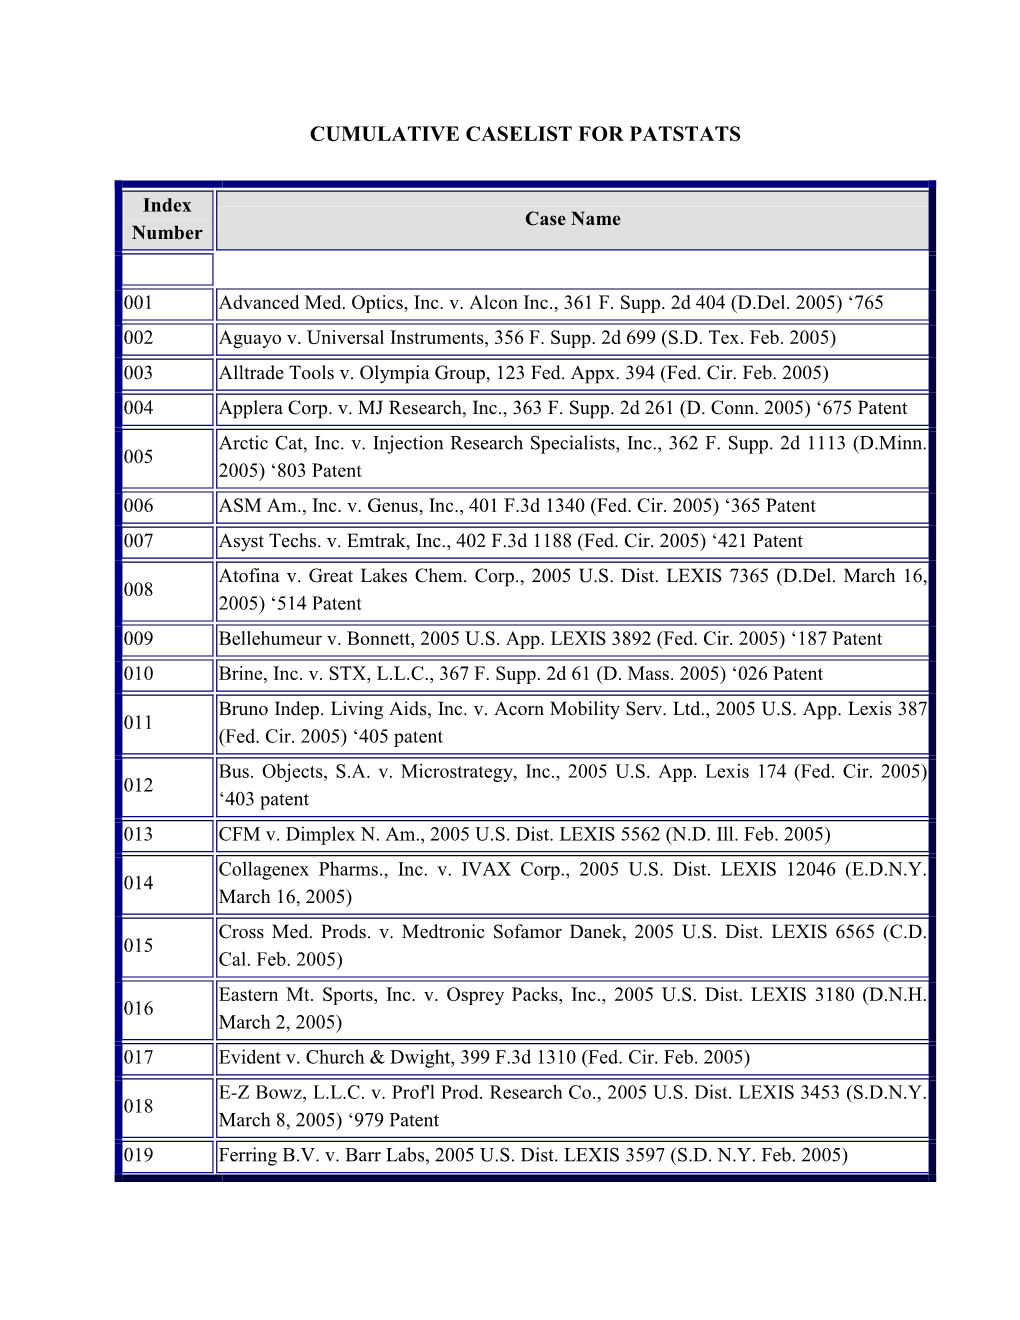 Cumulative Caselist for Patents, November 2006